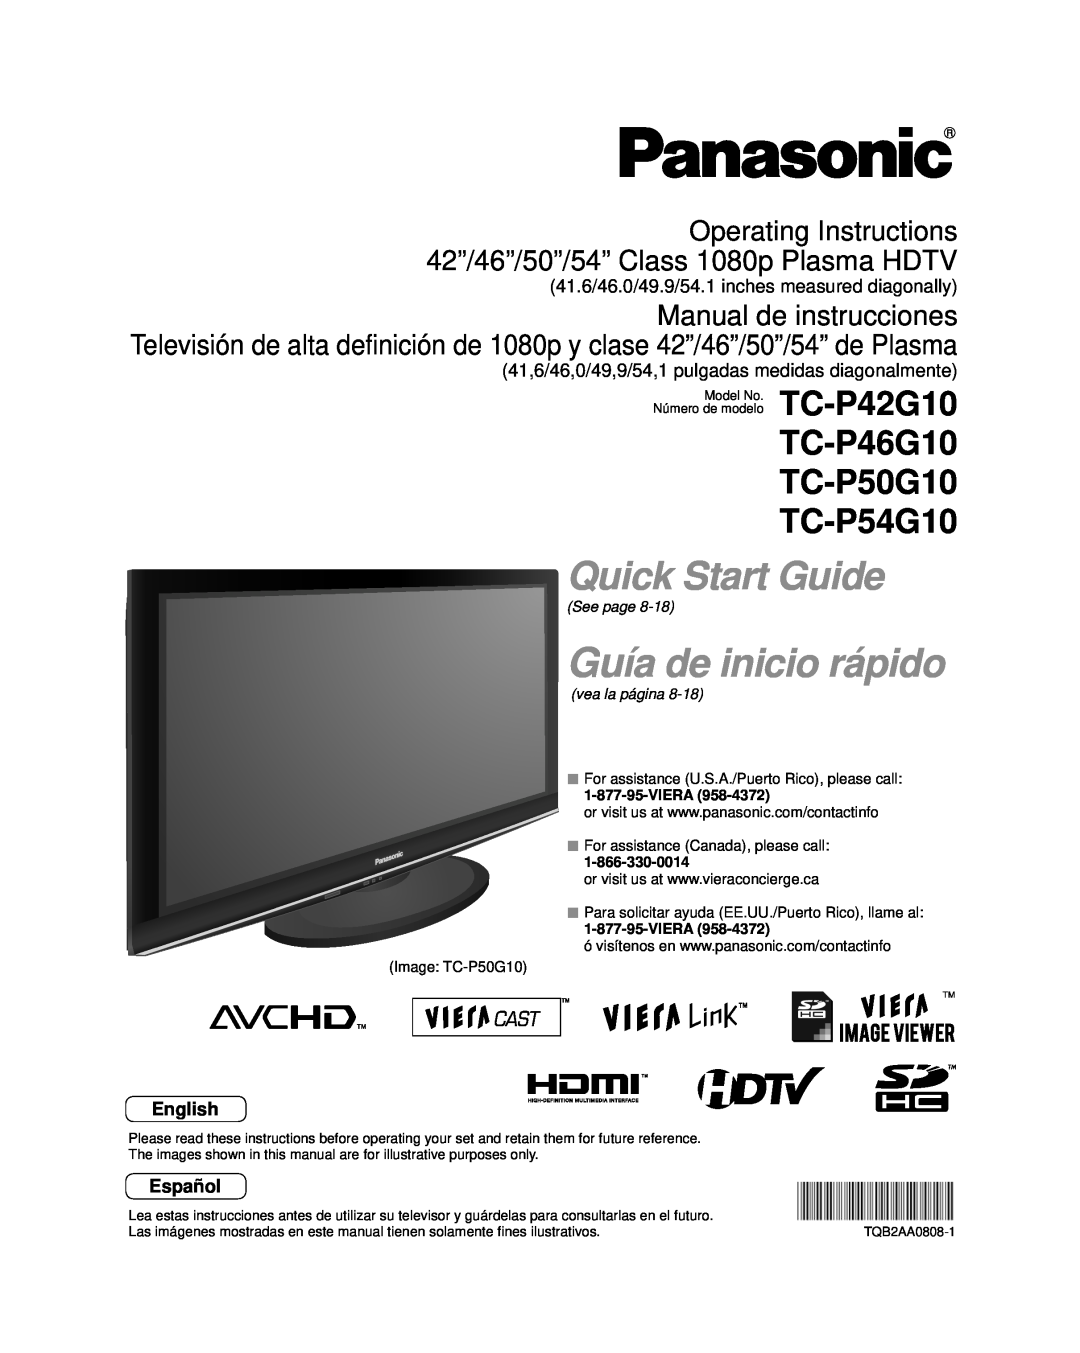 Panasonic quick start TC-P42G10 TC-P46G10 TC-P50G10 TC-P54G10, 41.6/46.0/49.9/54.1 inches measured diagonally, English 